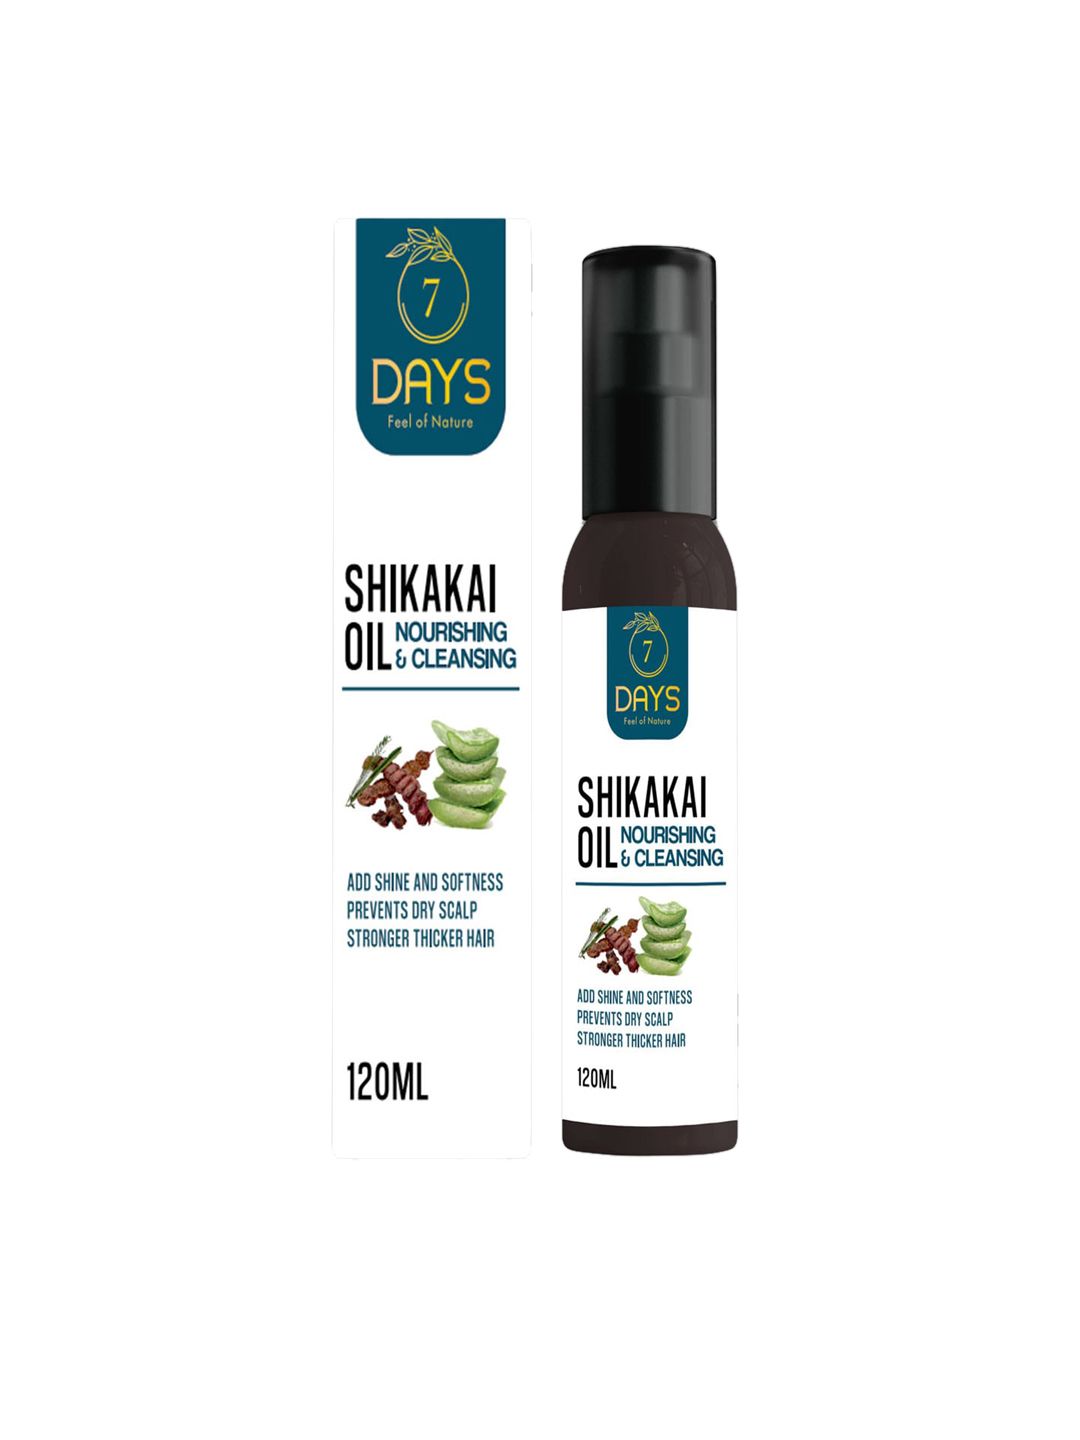 7 DAYS Nourishing & Cleansing Shikakai Hair Oil for Stronger Thicker Hair - 120 ml Price in India